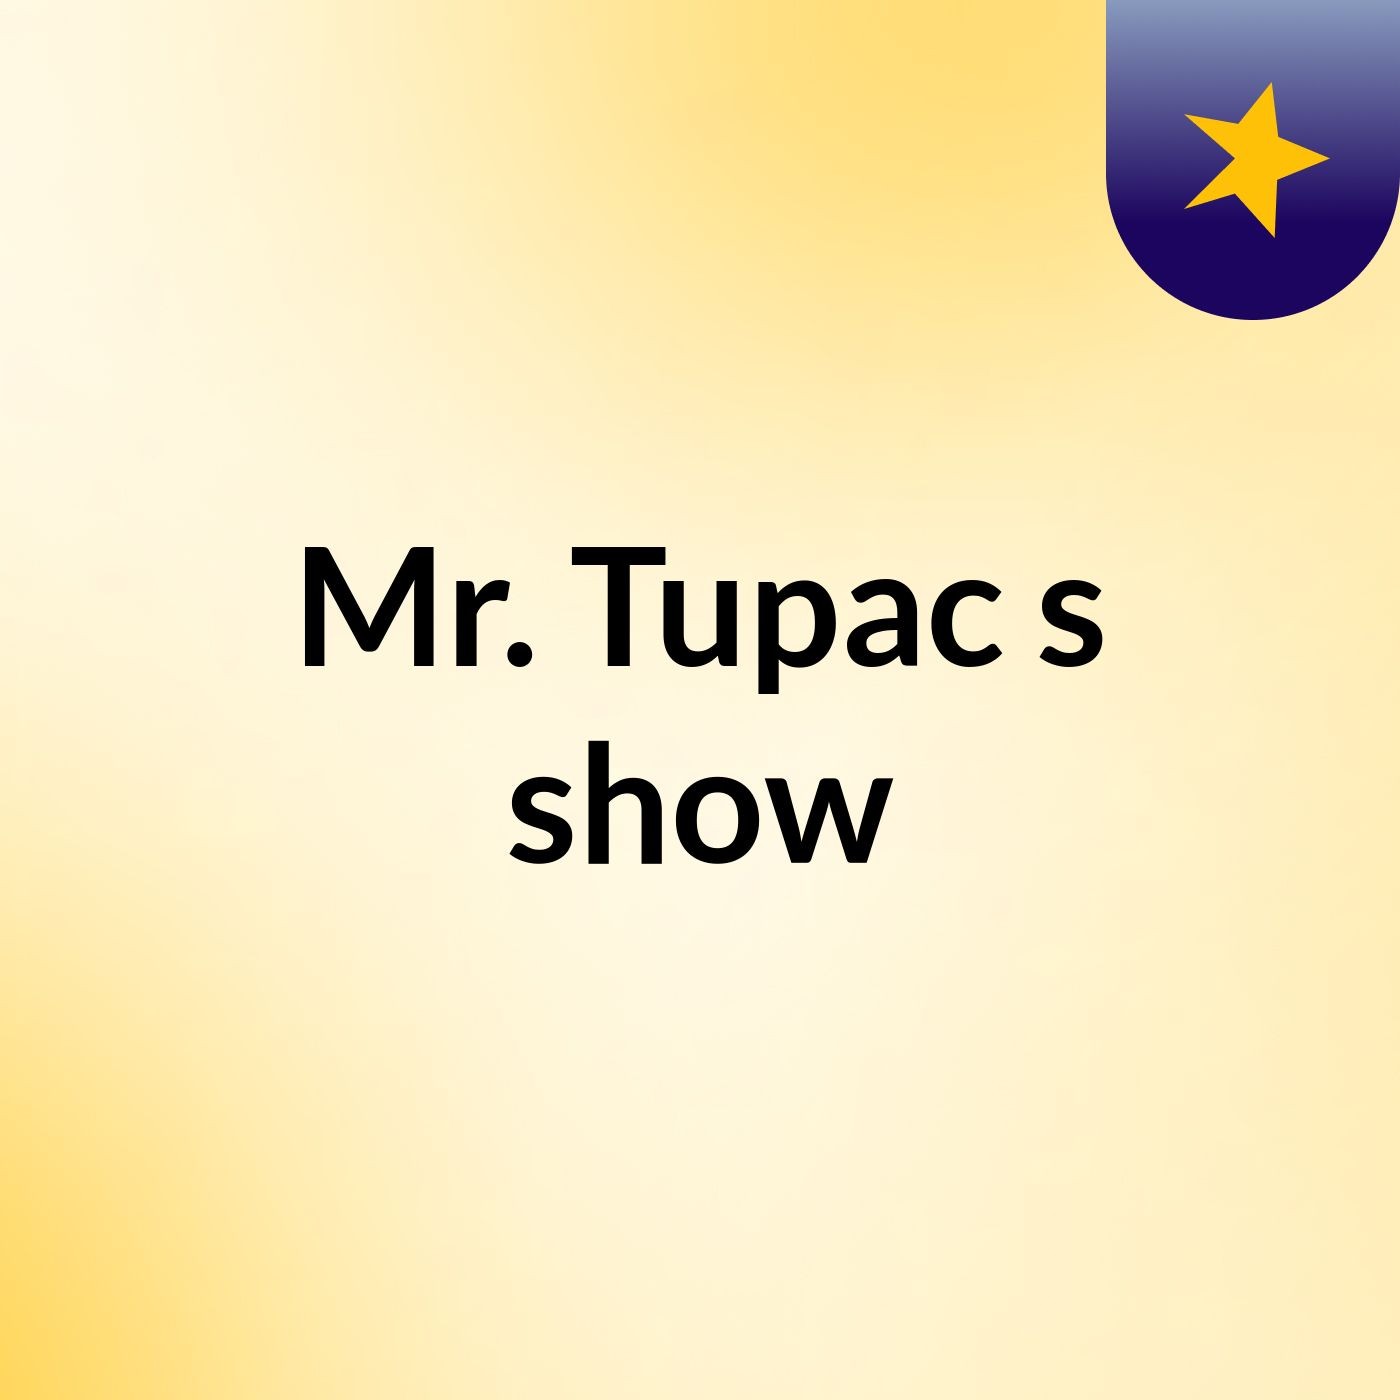 Mr. Tupac's show